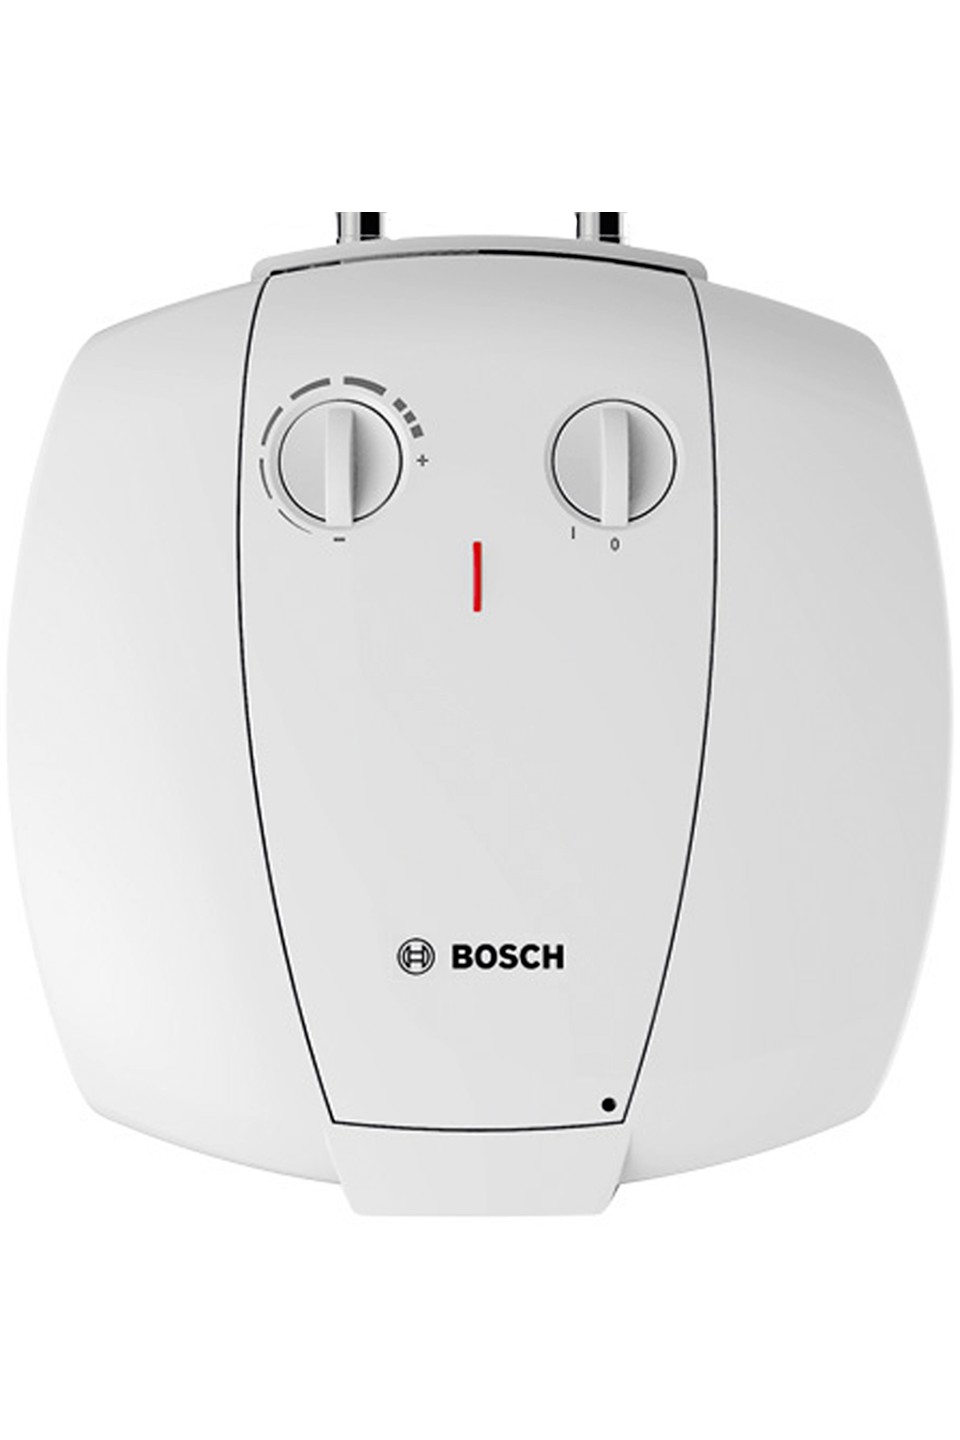 Цена бойлер на 15 литров Bosch TR 2000 T 15 T (7736504744) в Киеве